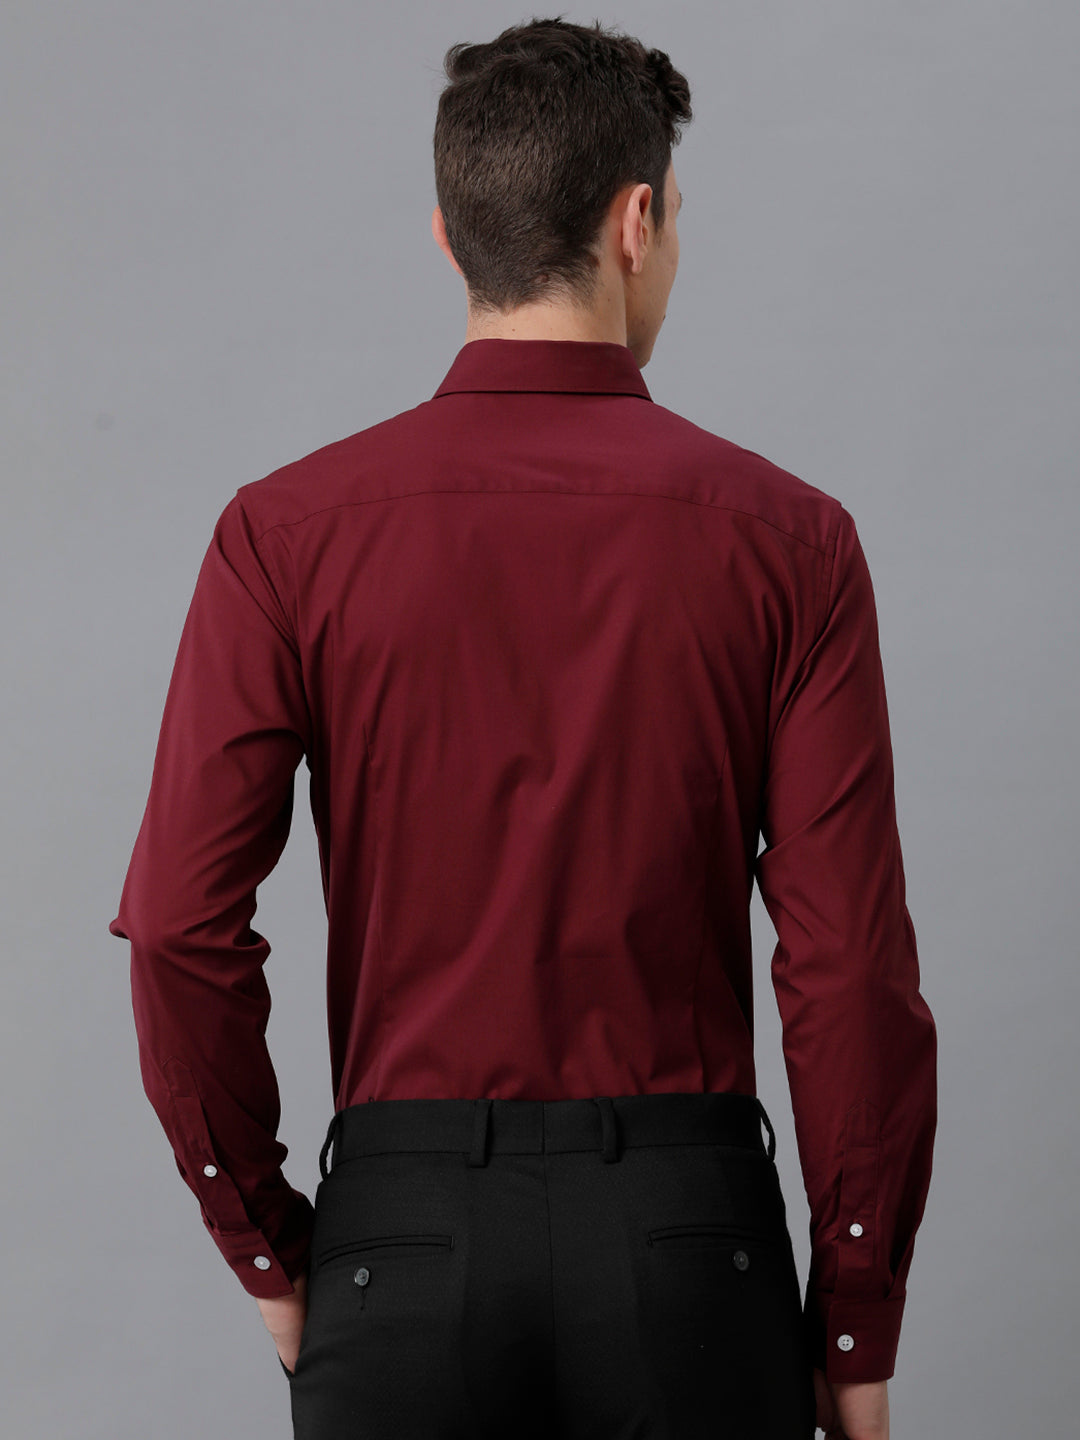 Aldeno Mens Slim Fit Wine Red Solid Formal Cotton Stretch Shirt (MONMUR)